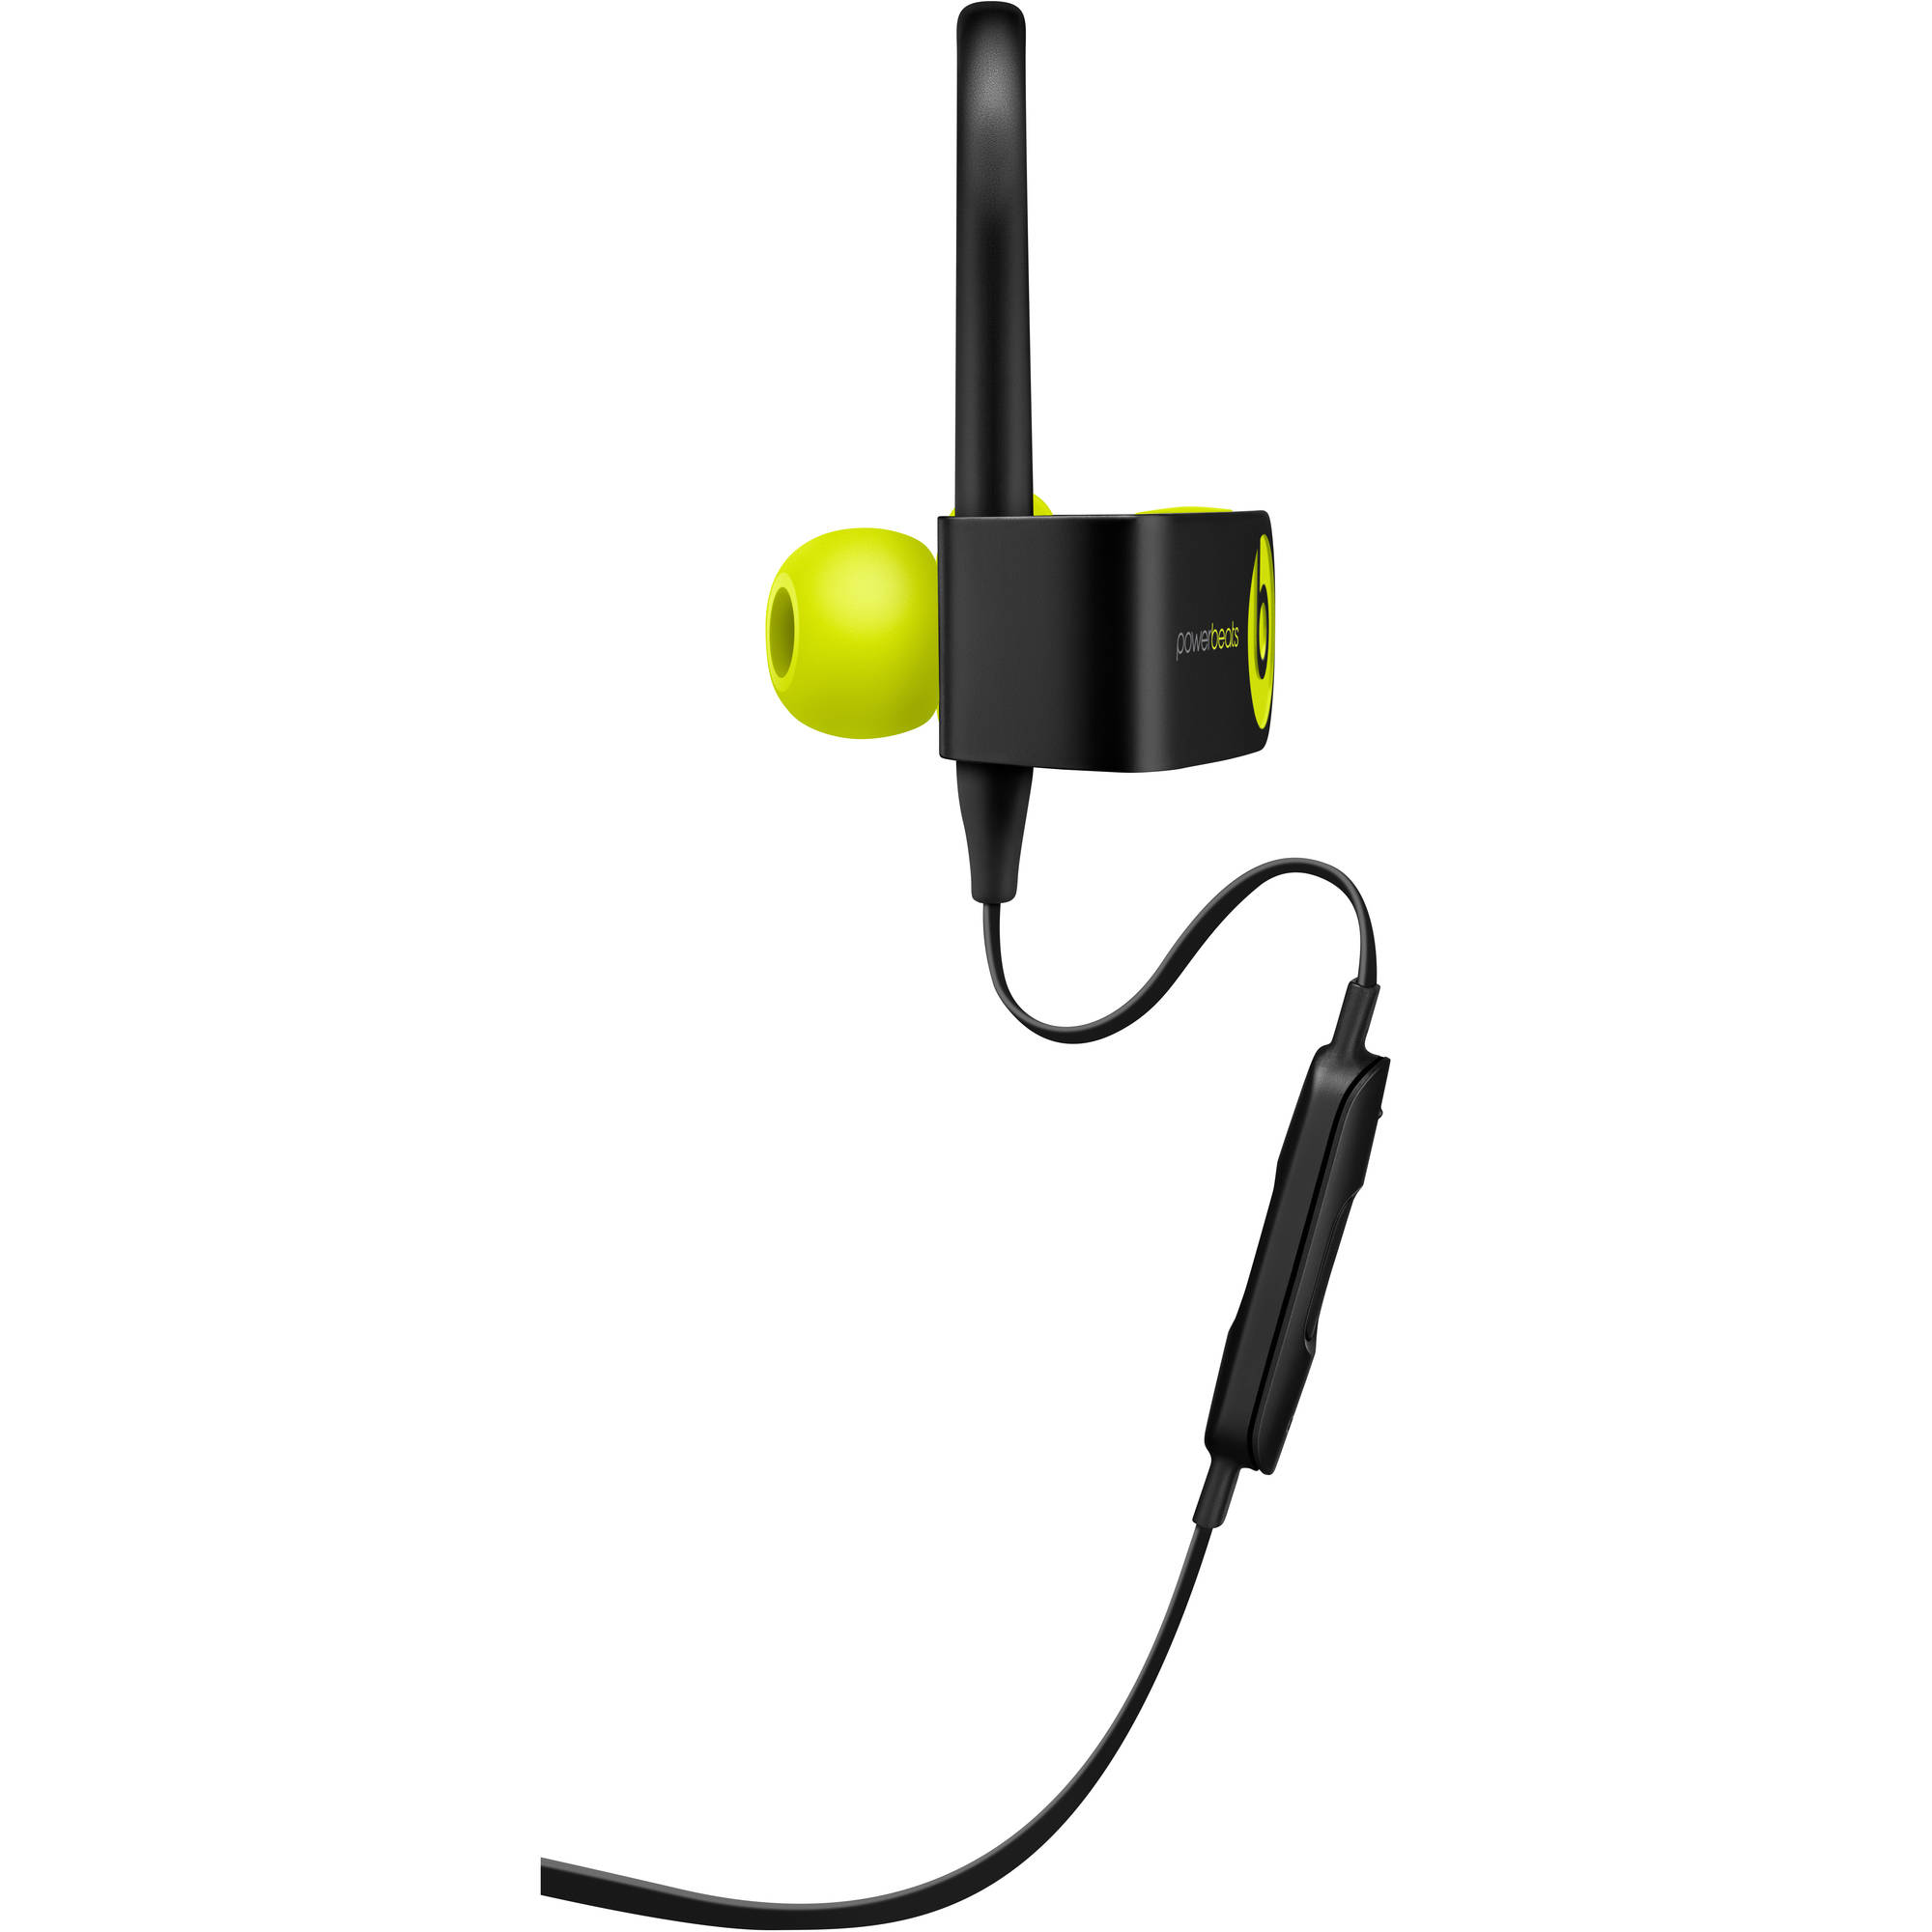 Used Apple Beats Powerbeats3 Wireless Shock Yellow In Ear Headphones MNN02LL/A - image 2 of 6